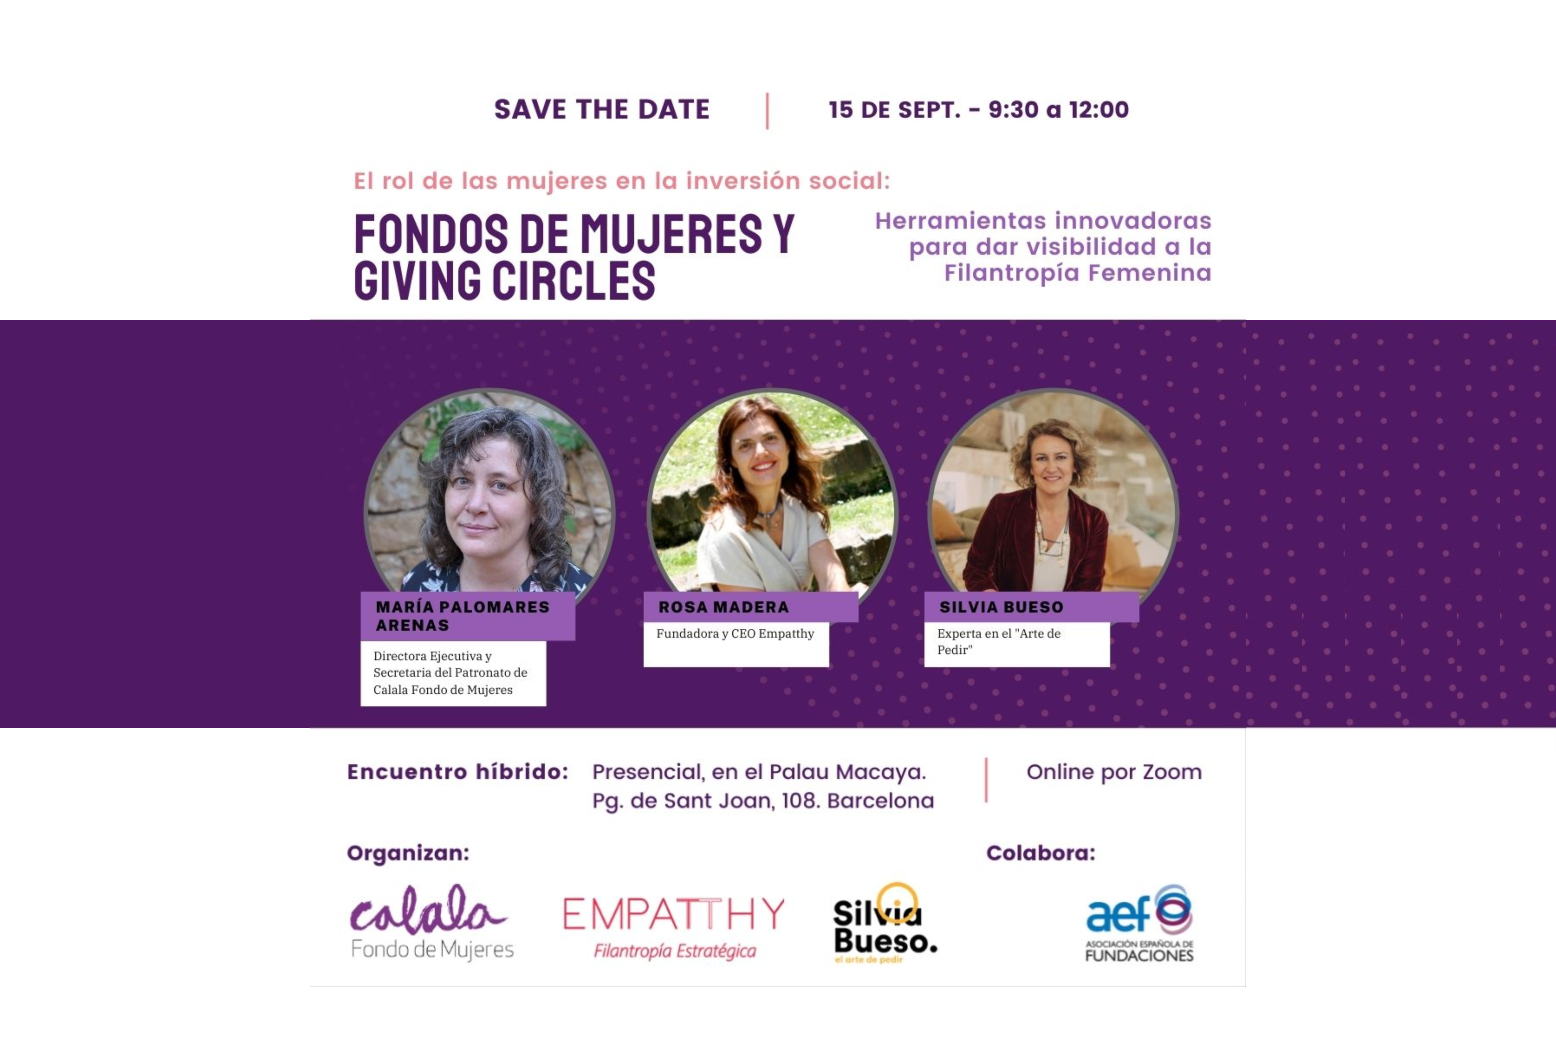 feminista-calala-rol-mujeres-inversión-social-giving-circles-fondo-empatthy-silvia-bueso